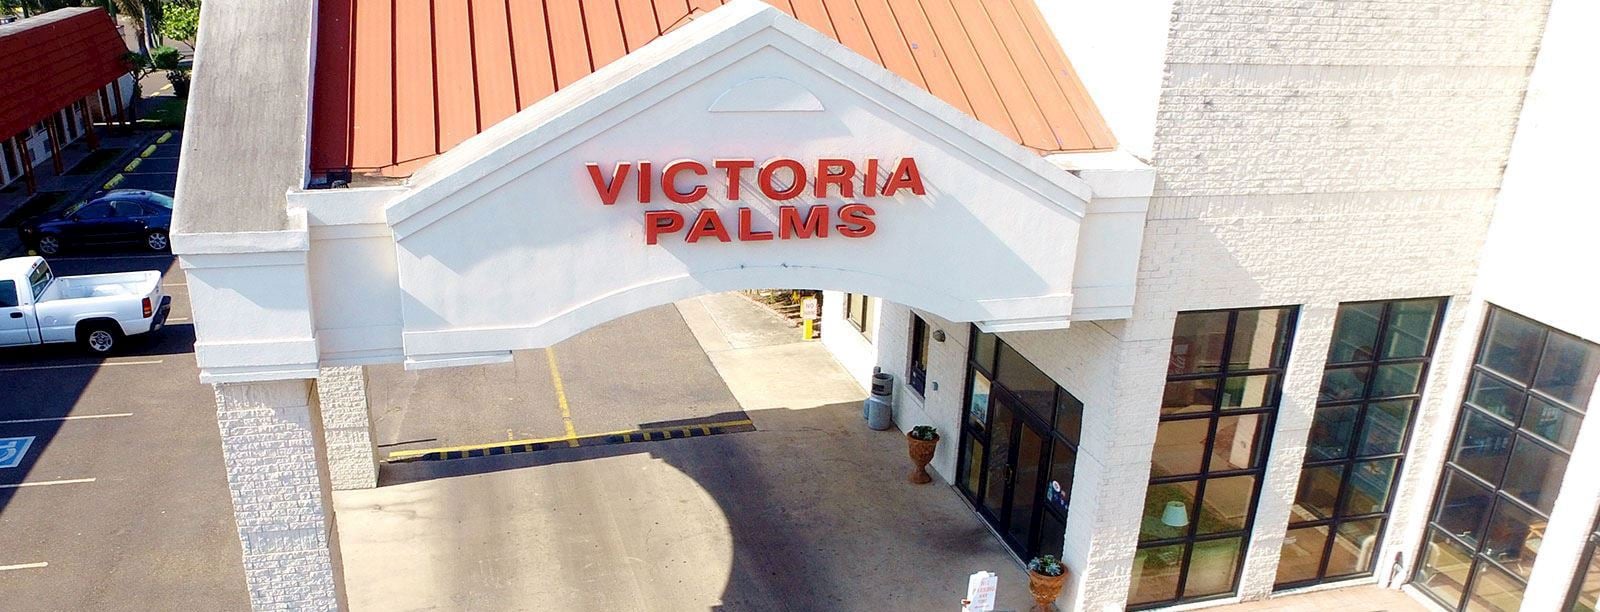 Victoria Palms Inn & Suites, Donna